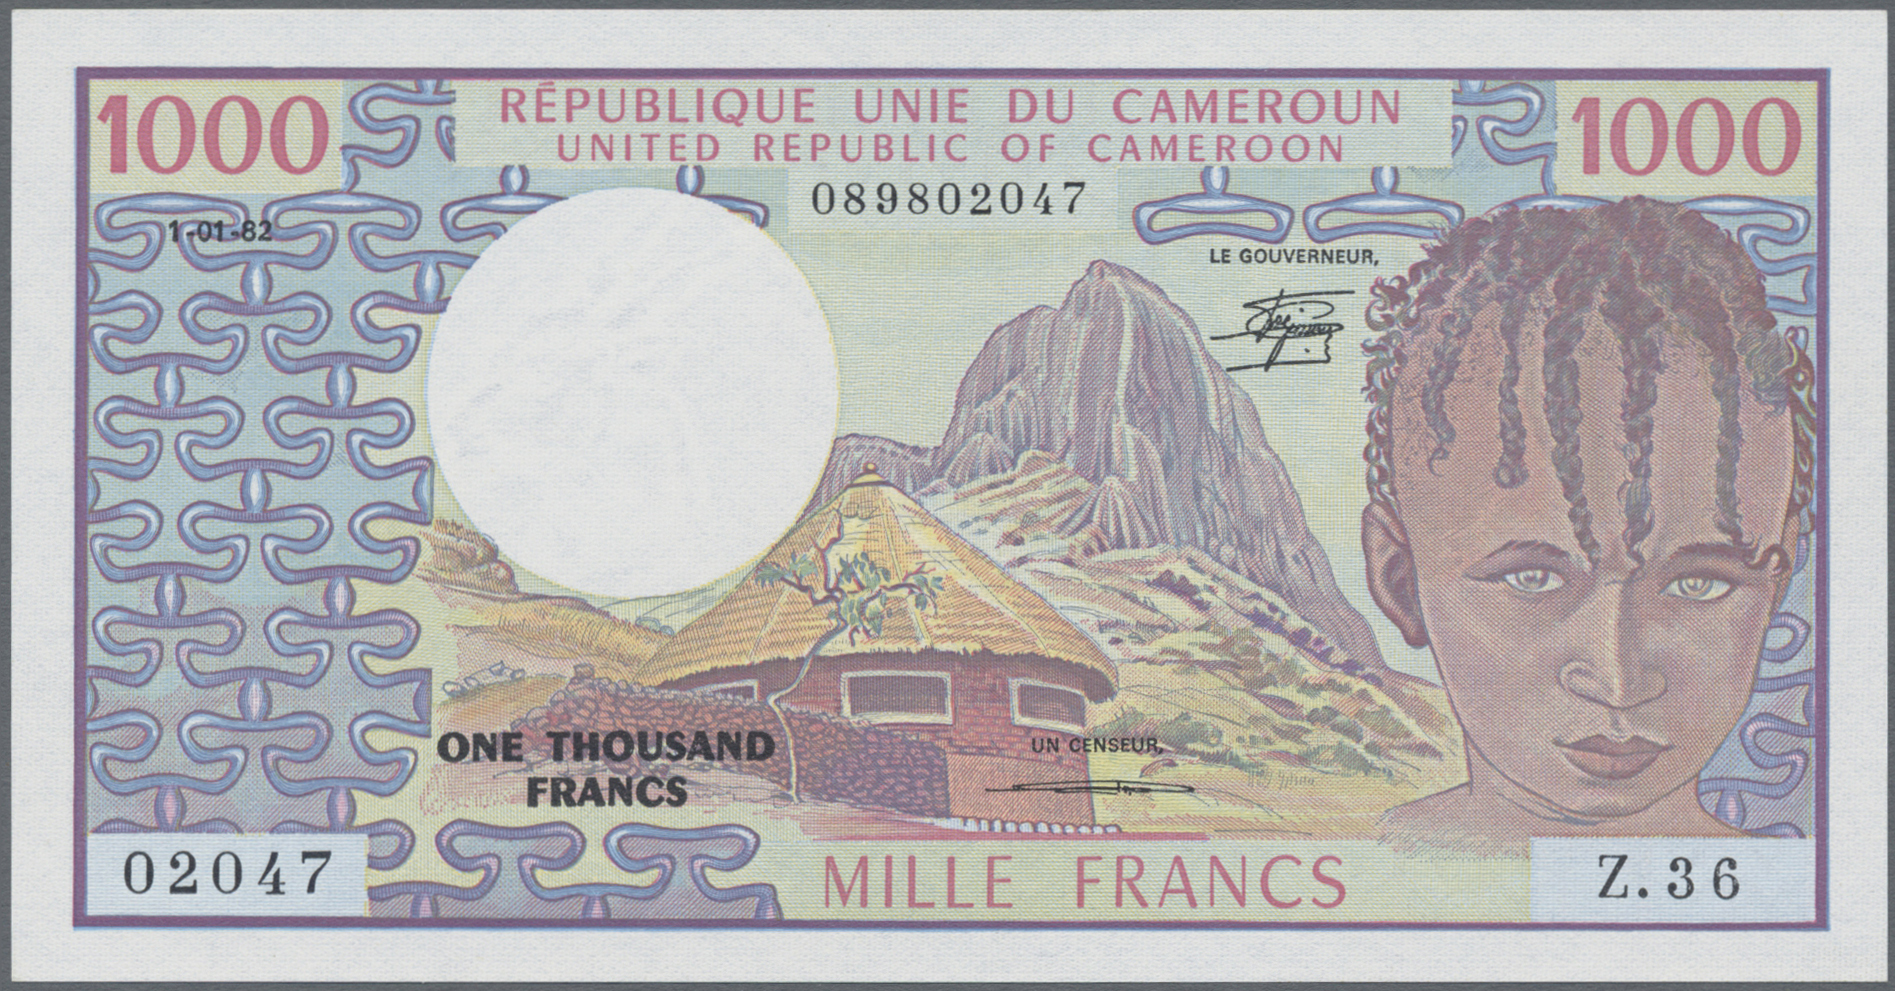 Lot 00246 - Cameroon / Kamerun | Banknoten  -  Auktionshaus Christoph Gärtner GmbH & Co. KG 56th AUCTION - Day 1